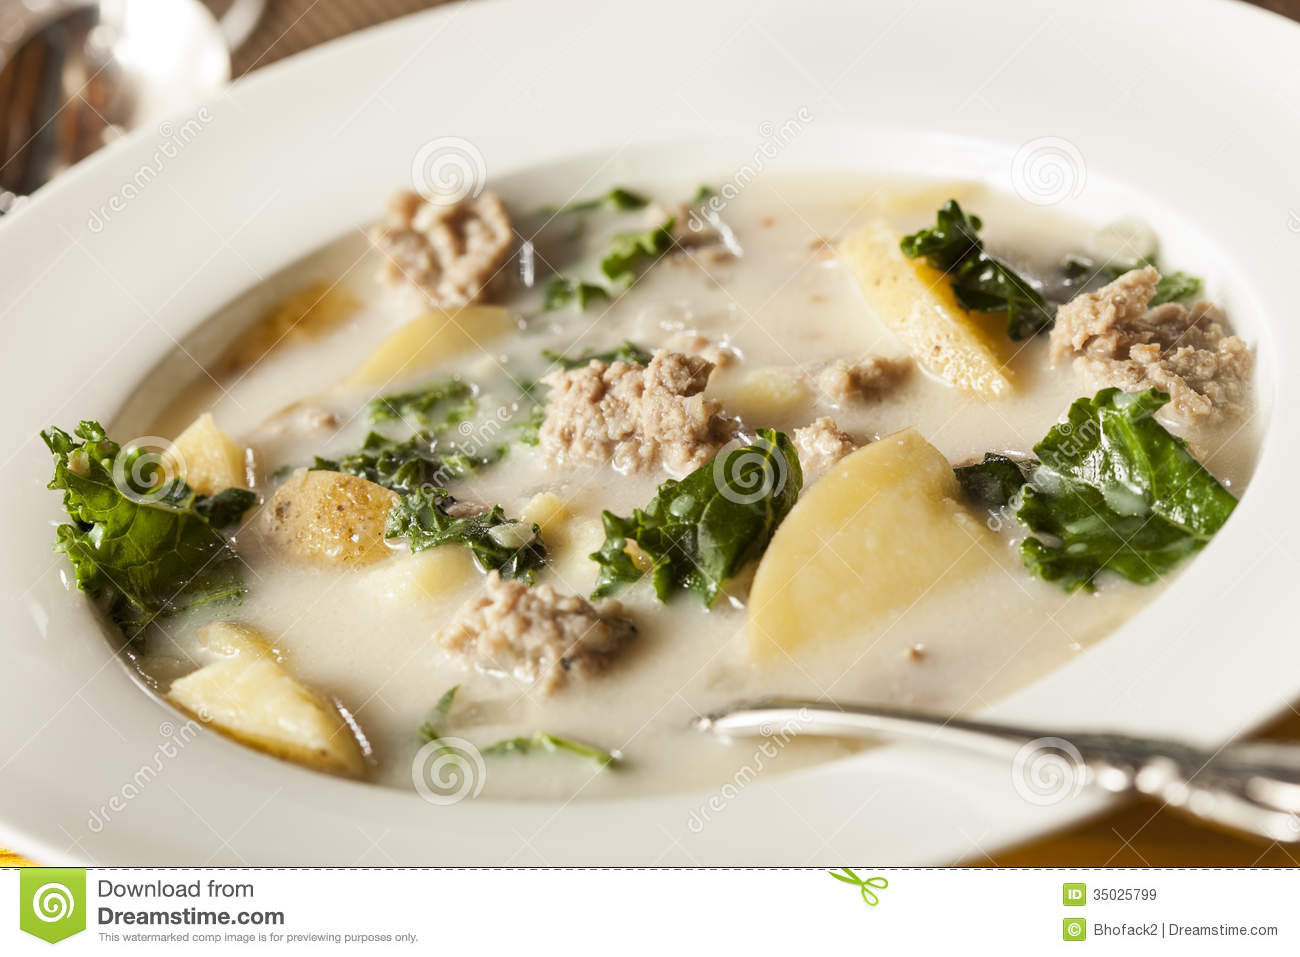 Sausage And Kale Tuscana Soup Royalty Free Stock Images   Image    